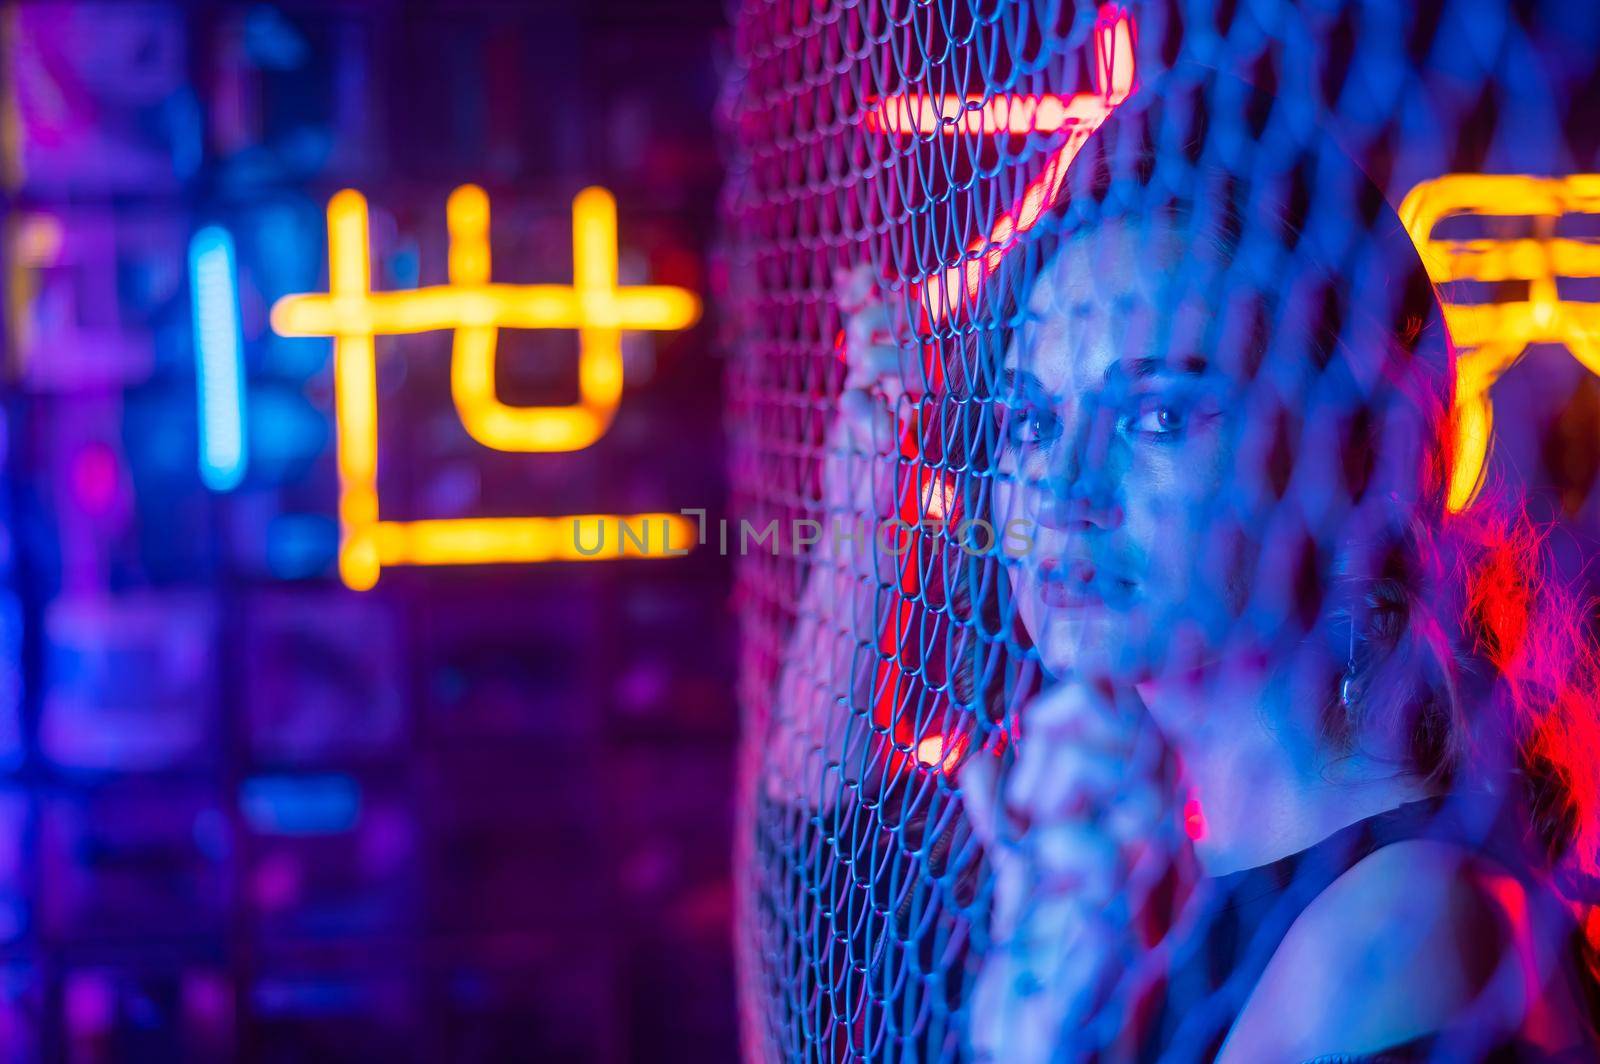 Caucasian woman in neon studio behind chain-link mesh. by mrwed54